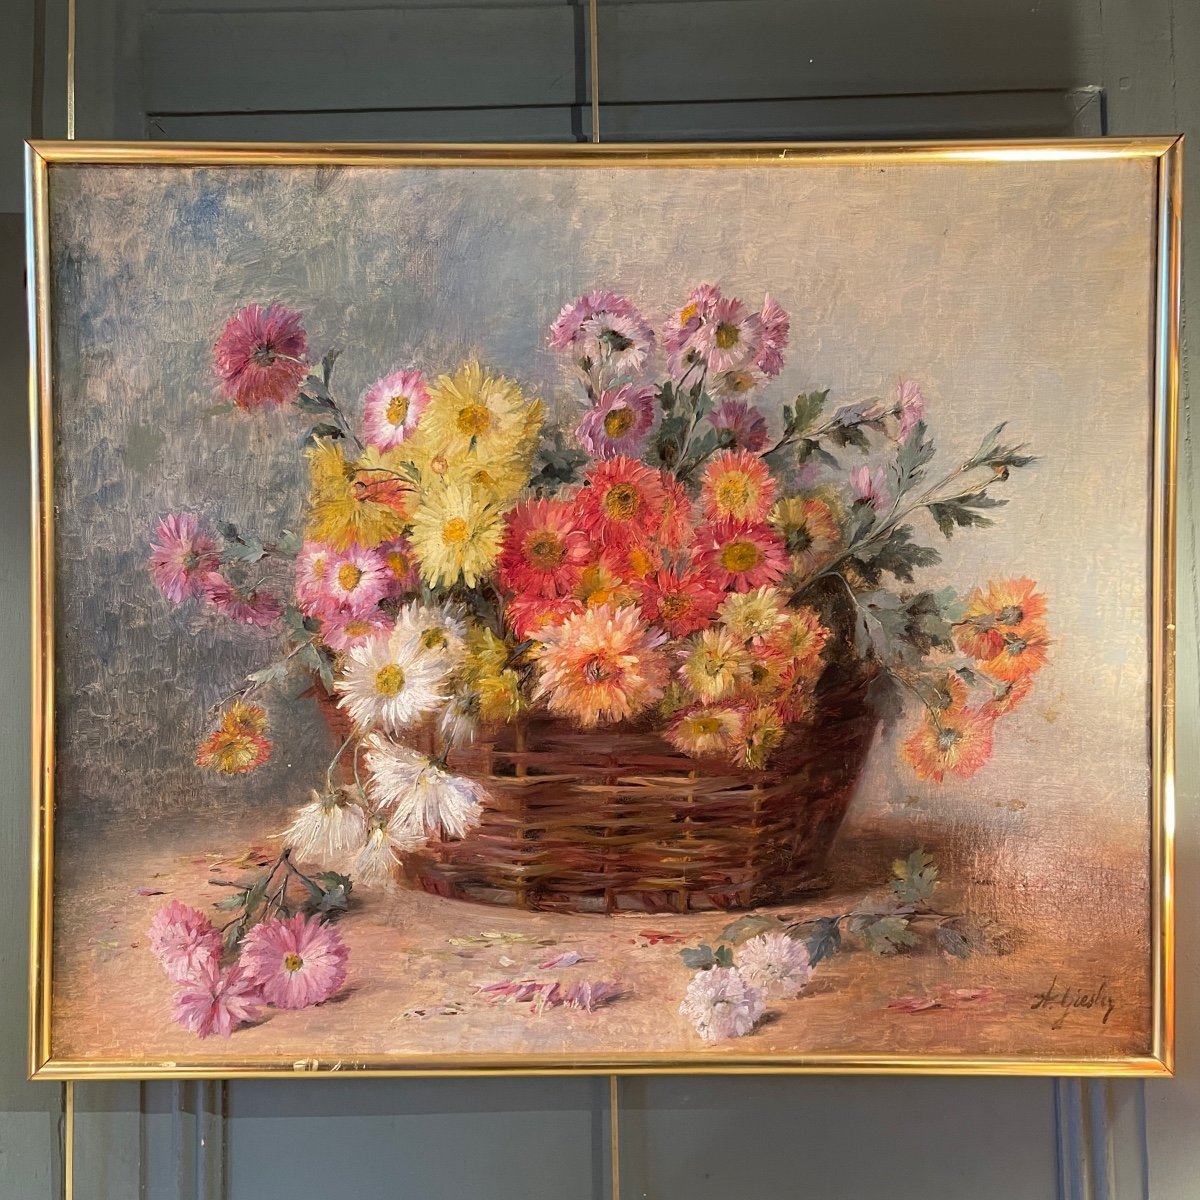 Bouquet Of Flowers In A Basket